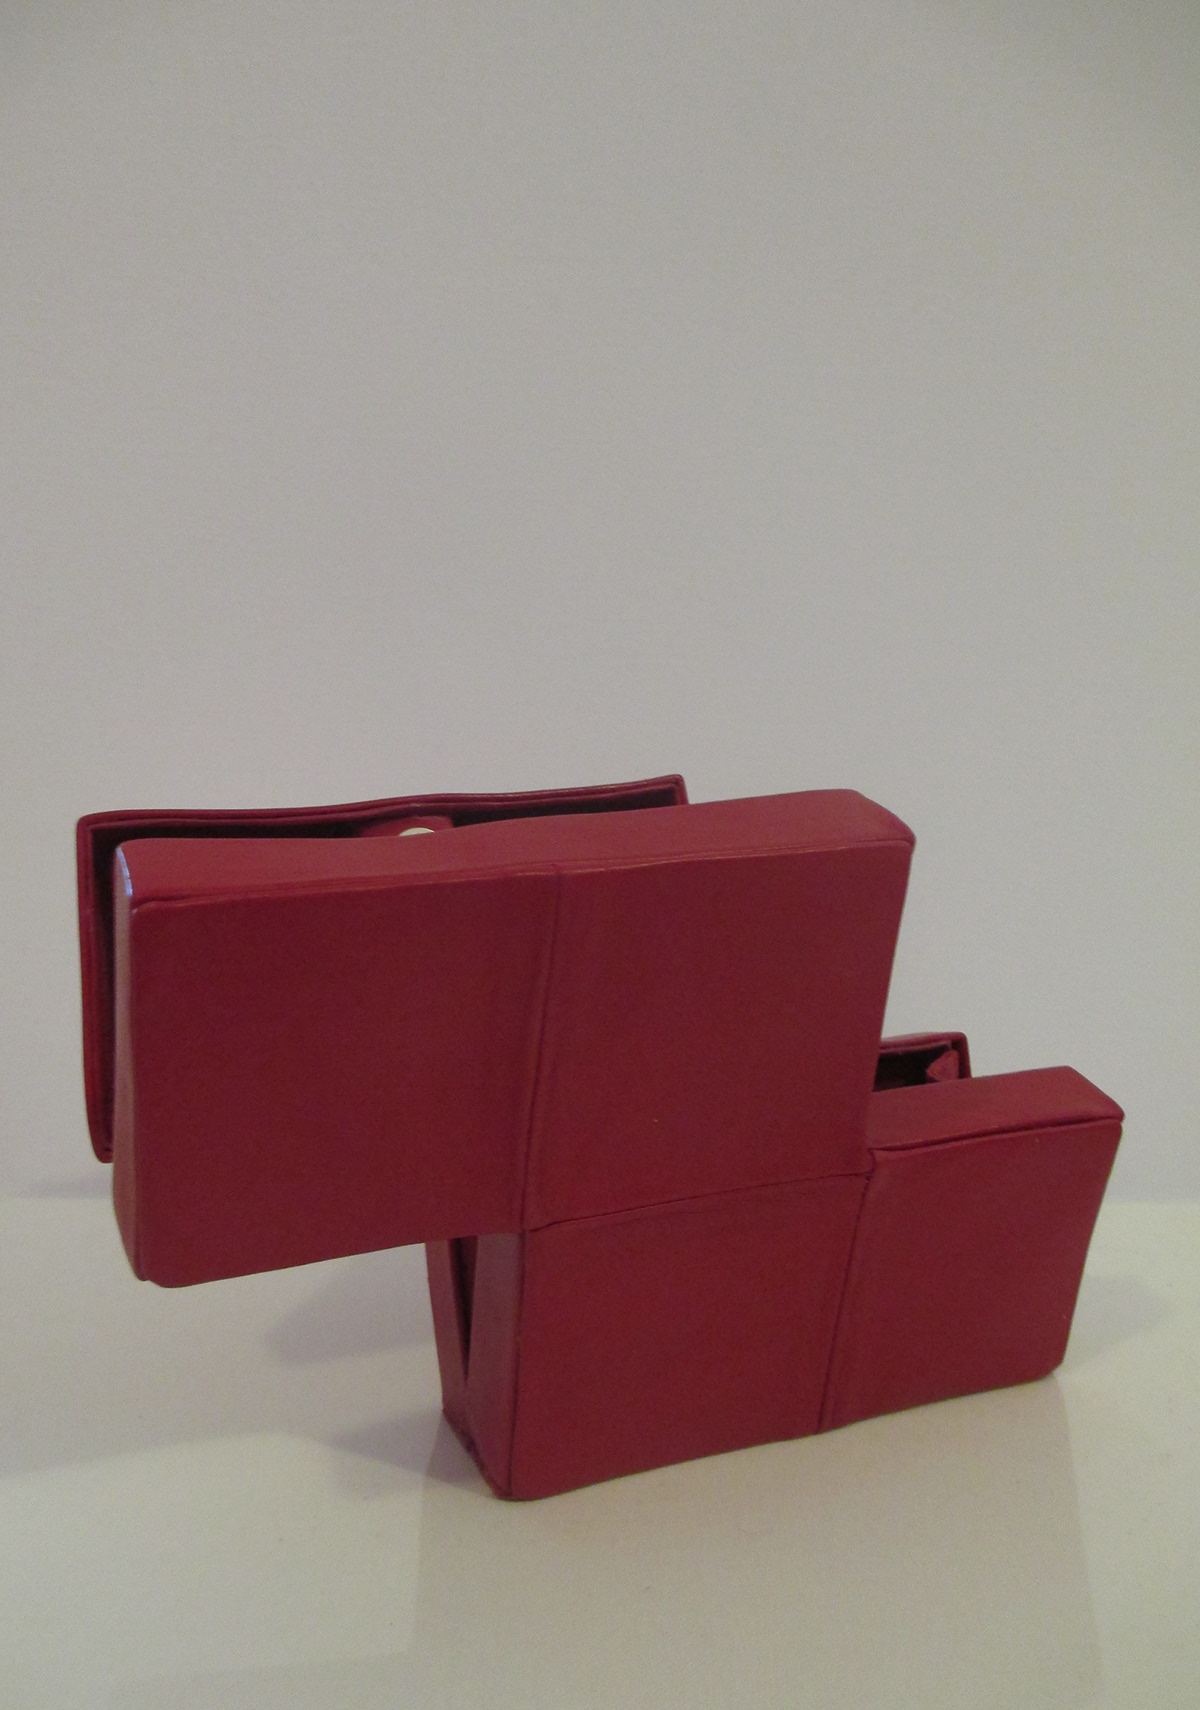 accessory design accessories SCAD handbag clutch tetris edgy lether handmade Fun